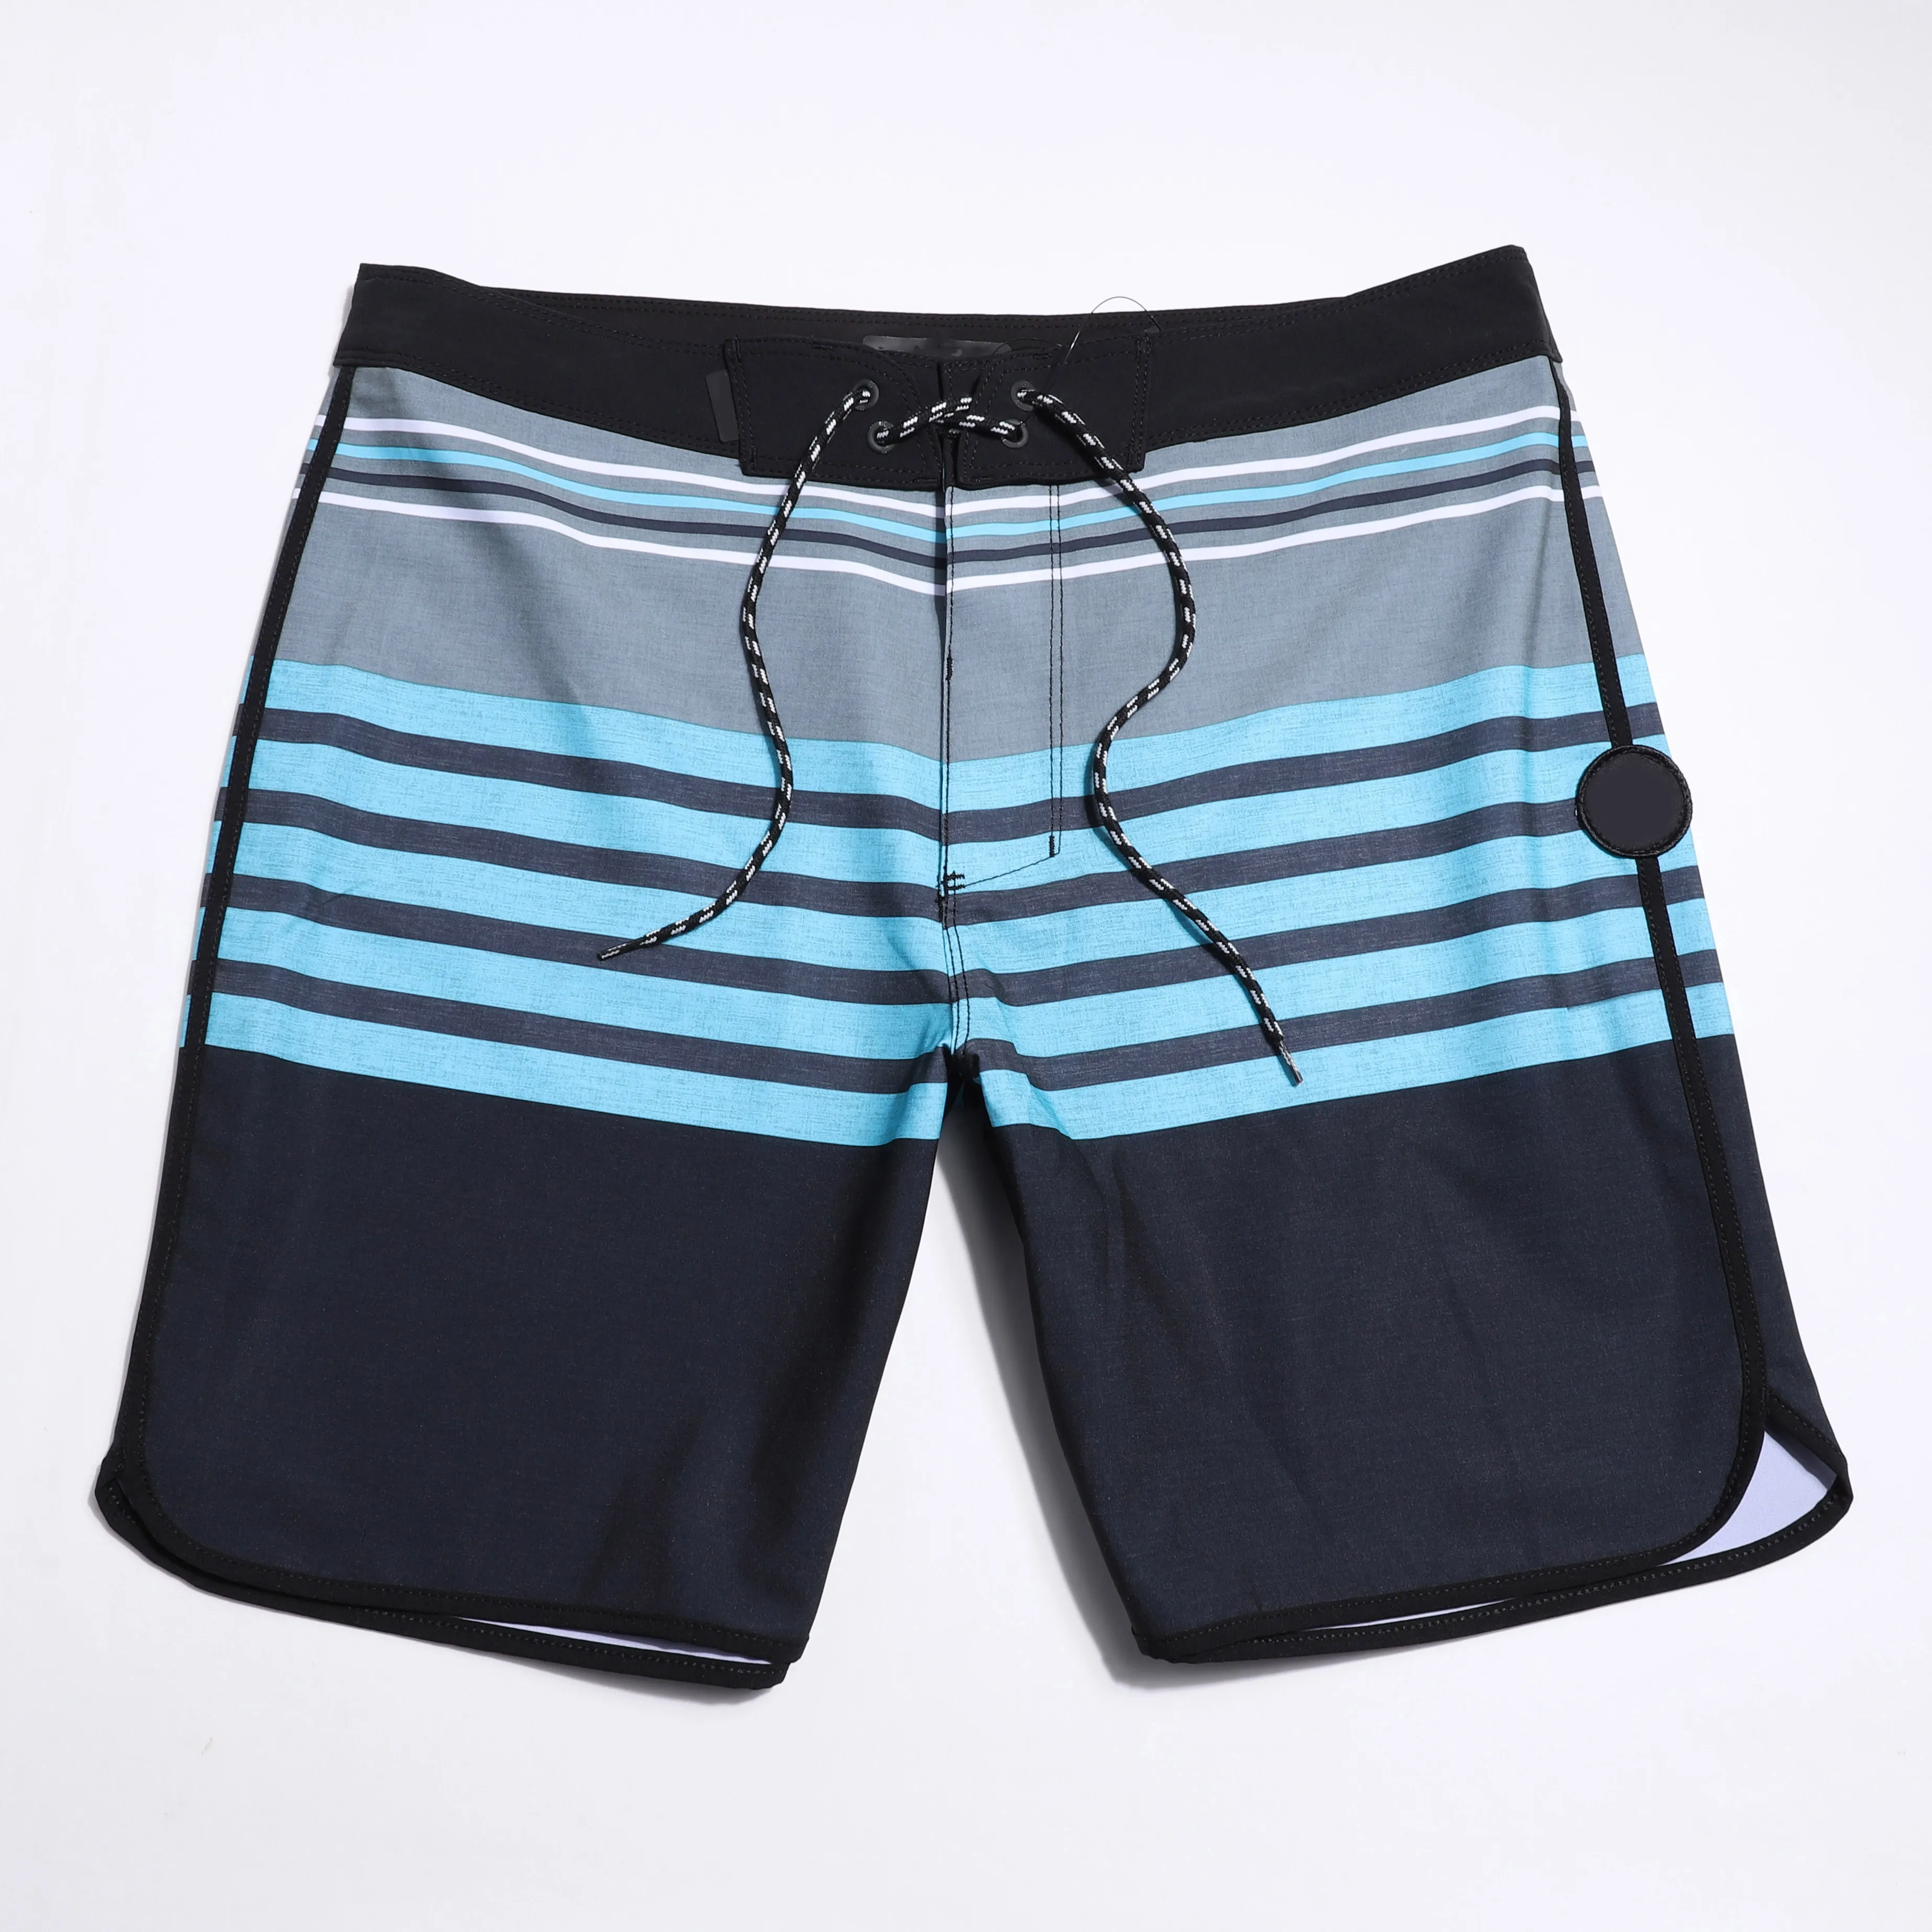 Short swim shorts spandex recycle polyester designer trunks Pockets Water proof Board short Quick Dry Surfing sports Regular beachshorts cargo pants